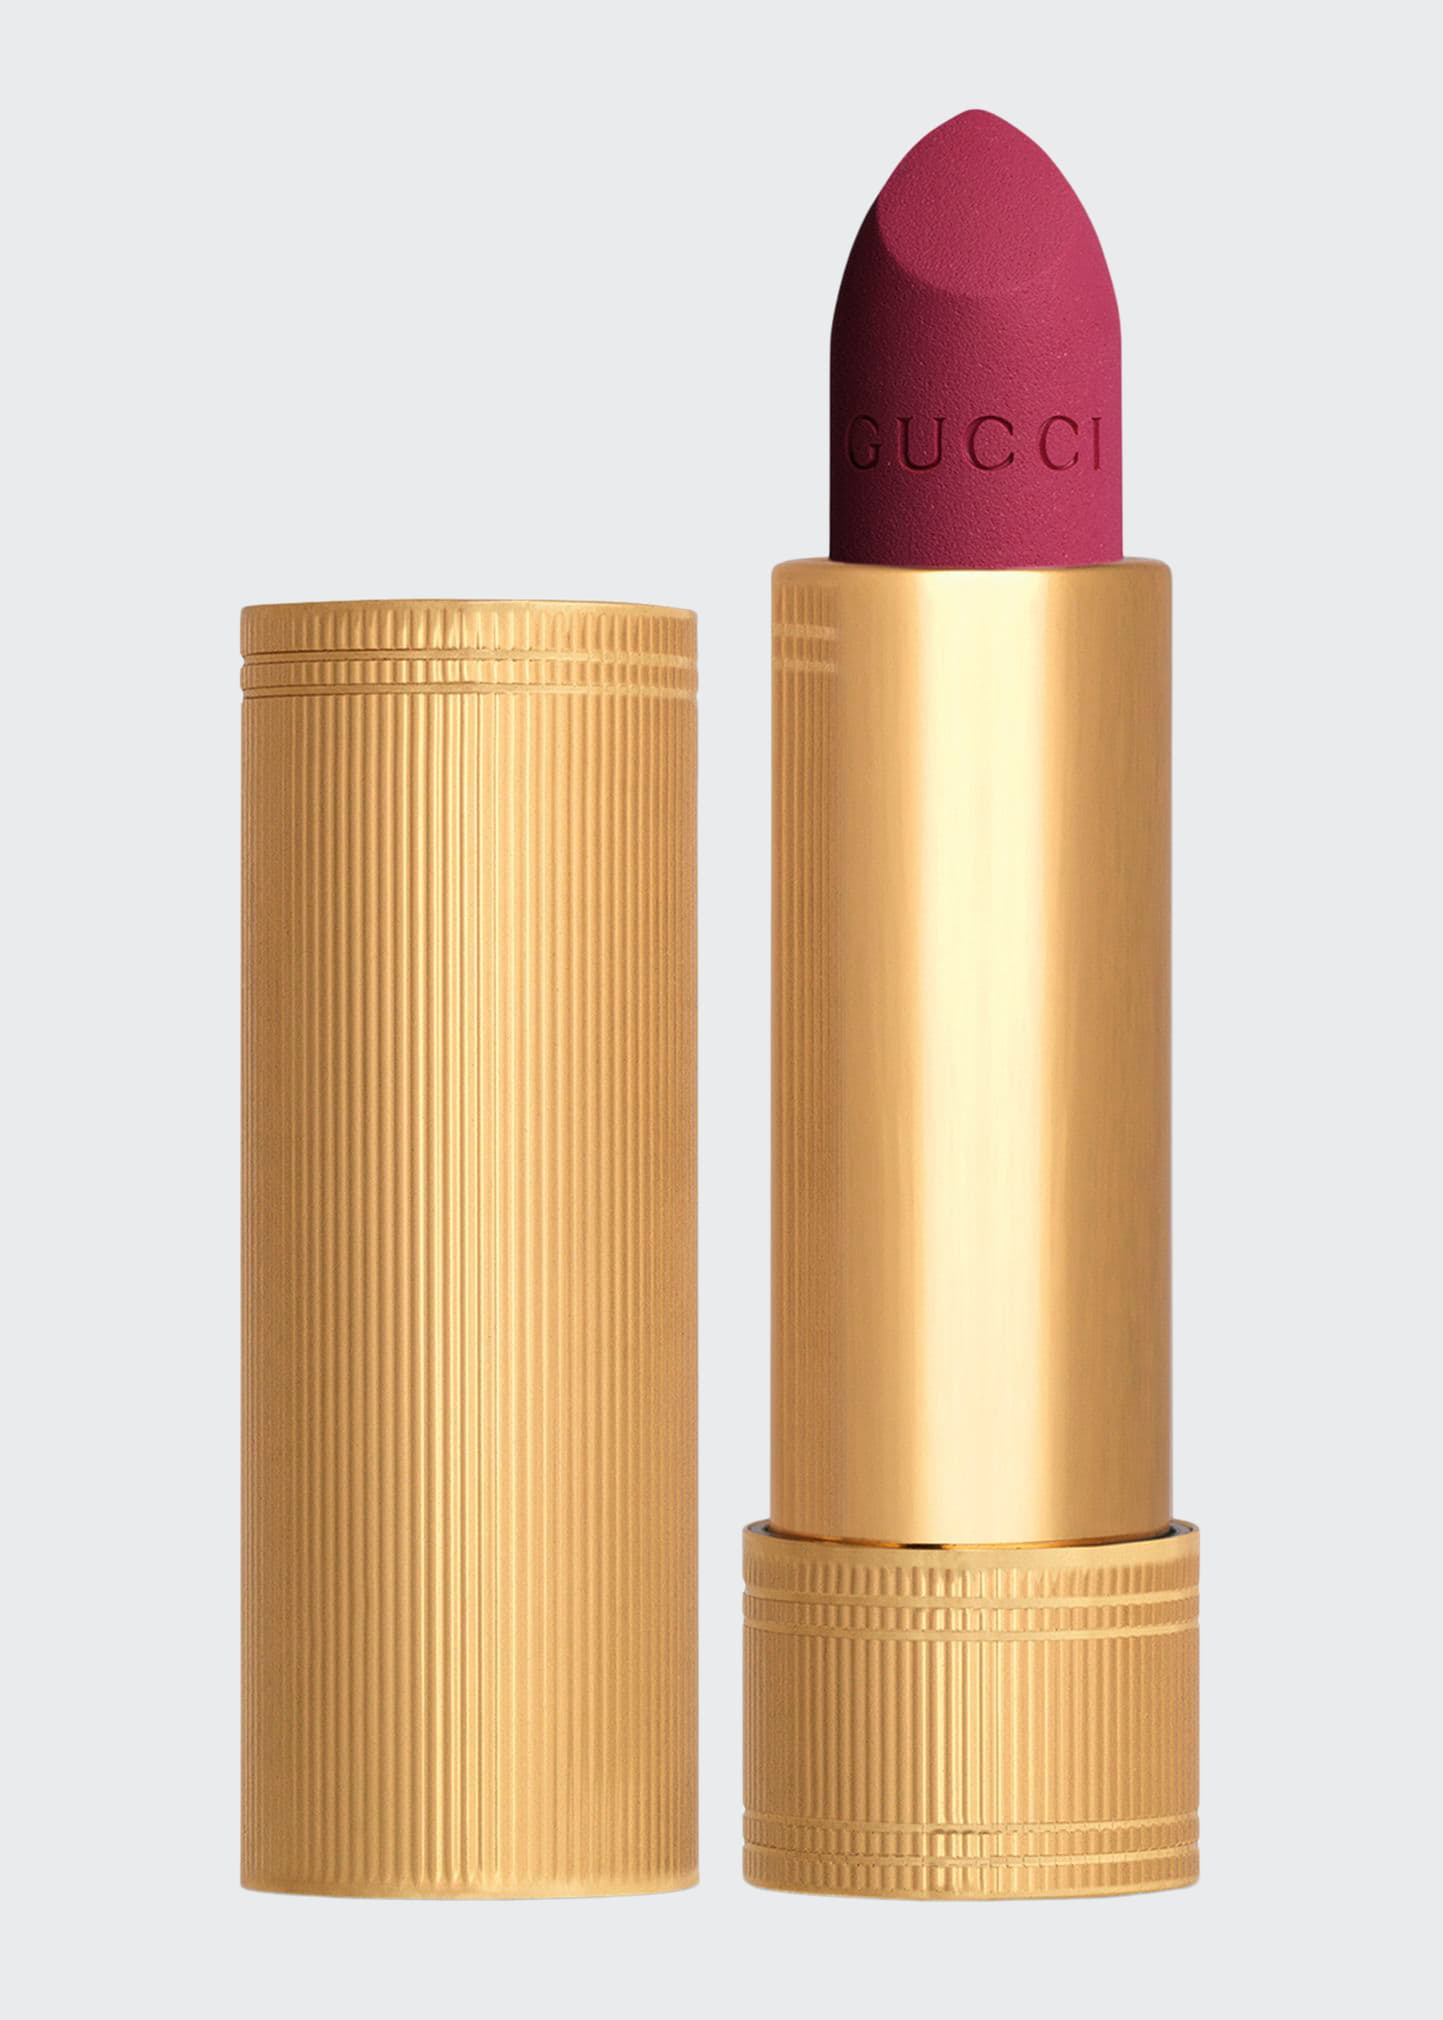 Gucci Rouge A Levres Matte Lipstick In 404 Magenta